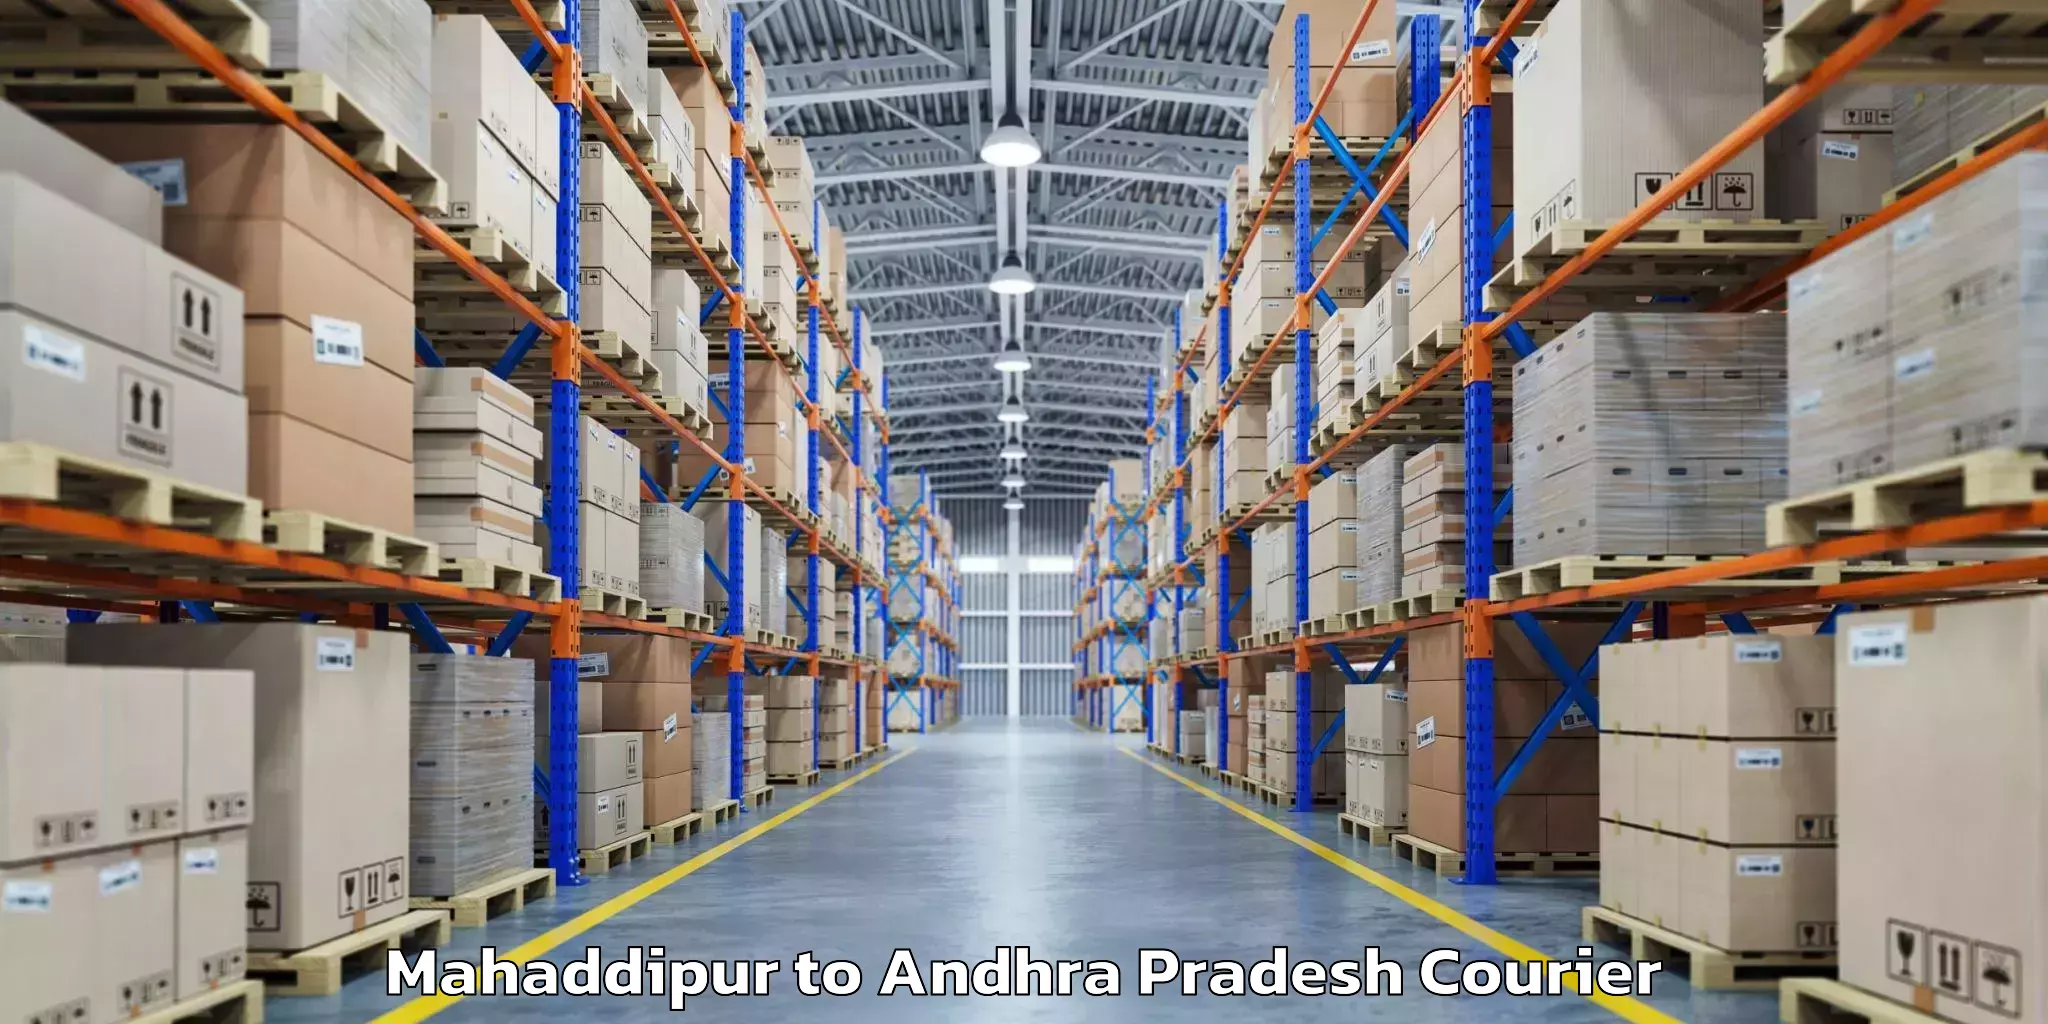 Luggage transport company Mahaddipur to Ganapavaram